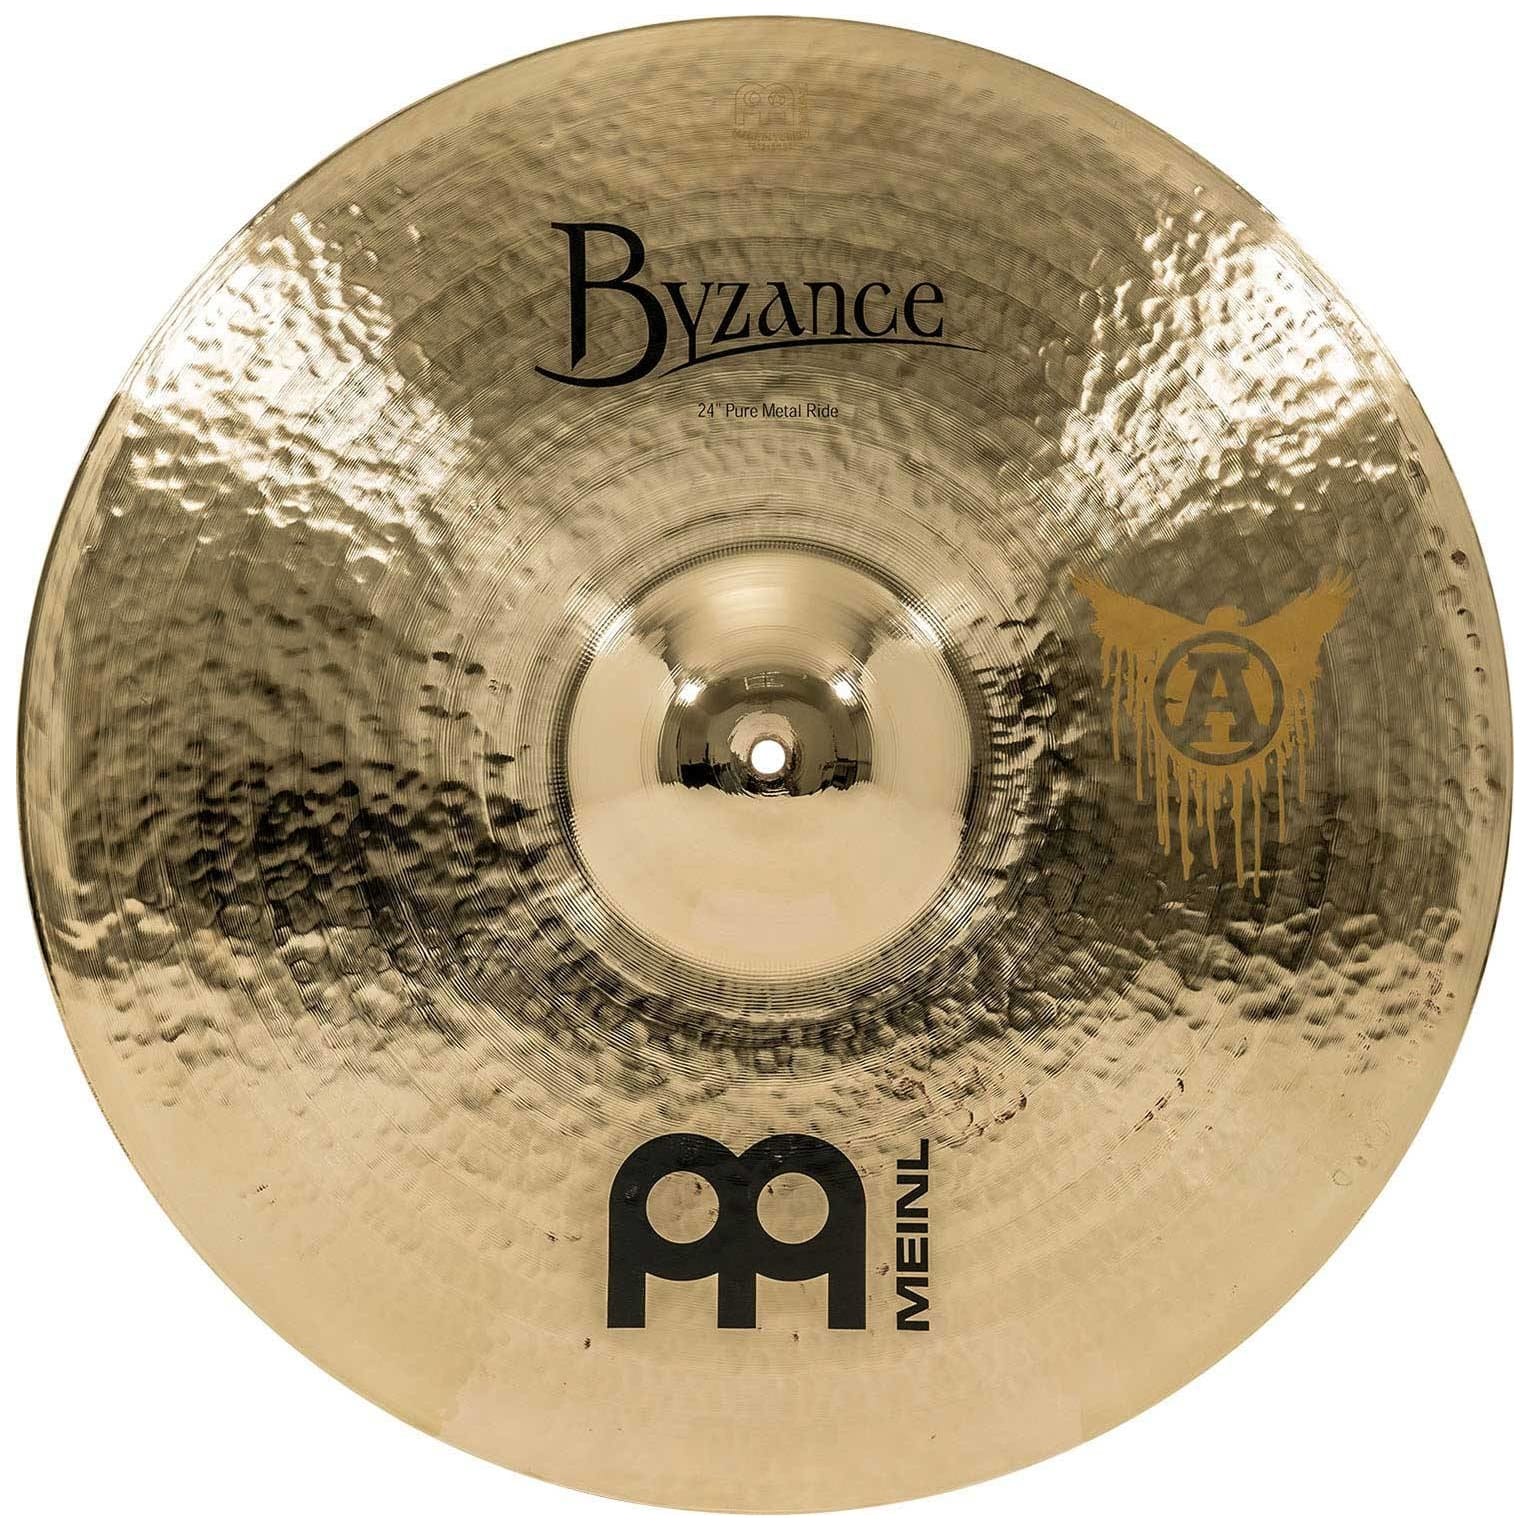 Meinl Cymbals B24PMR-B - 24" Byzance Brilliant Pure Metal Ride 